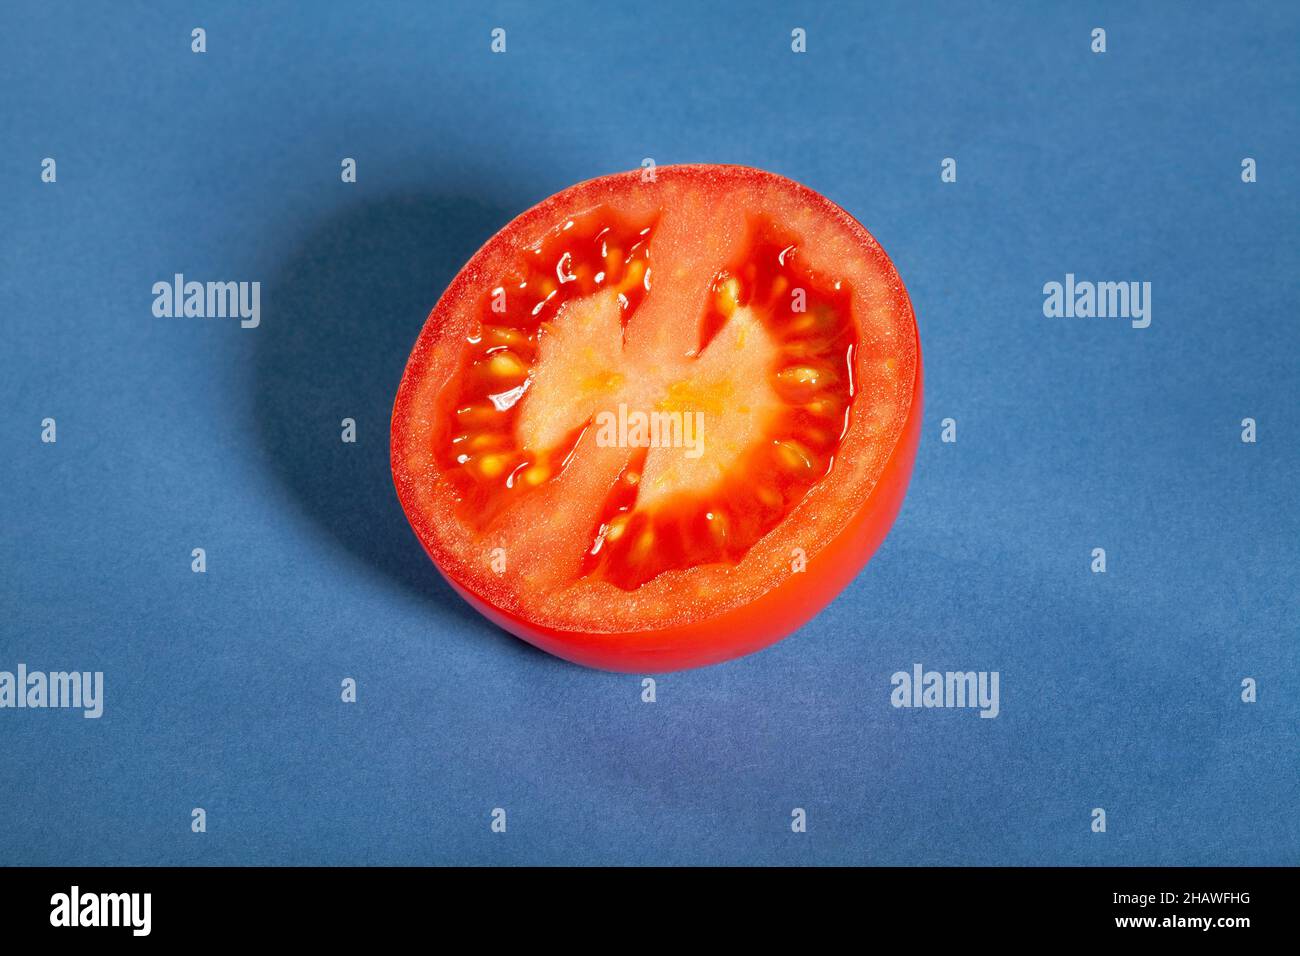 plum tomato on blue background Stock Photo